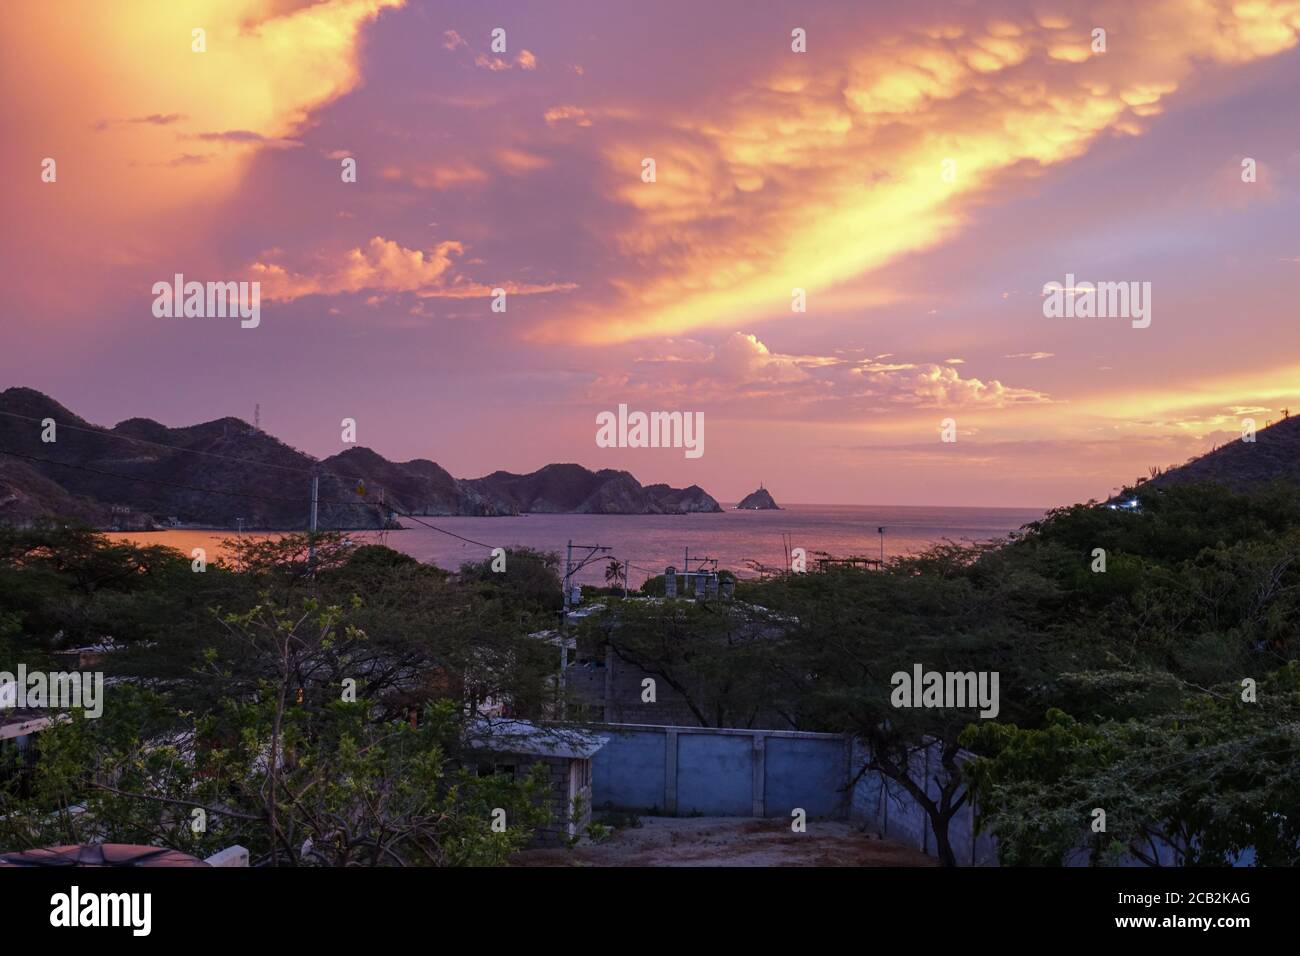 The touristic village of Taganga near Santa Marta in beautiful sunset light 2020. Stock Photo